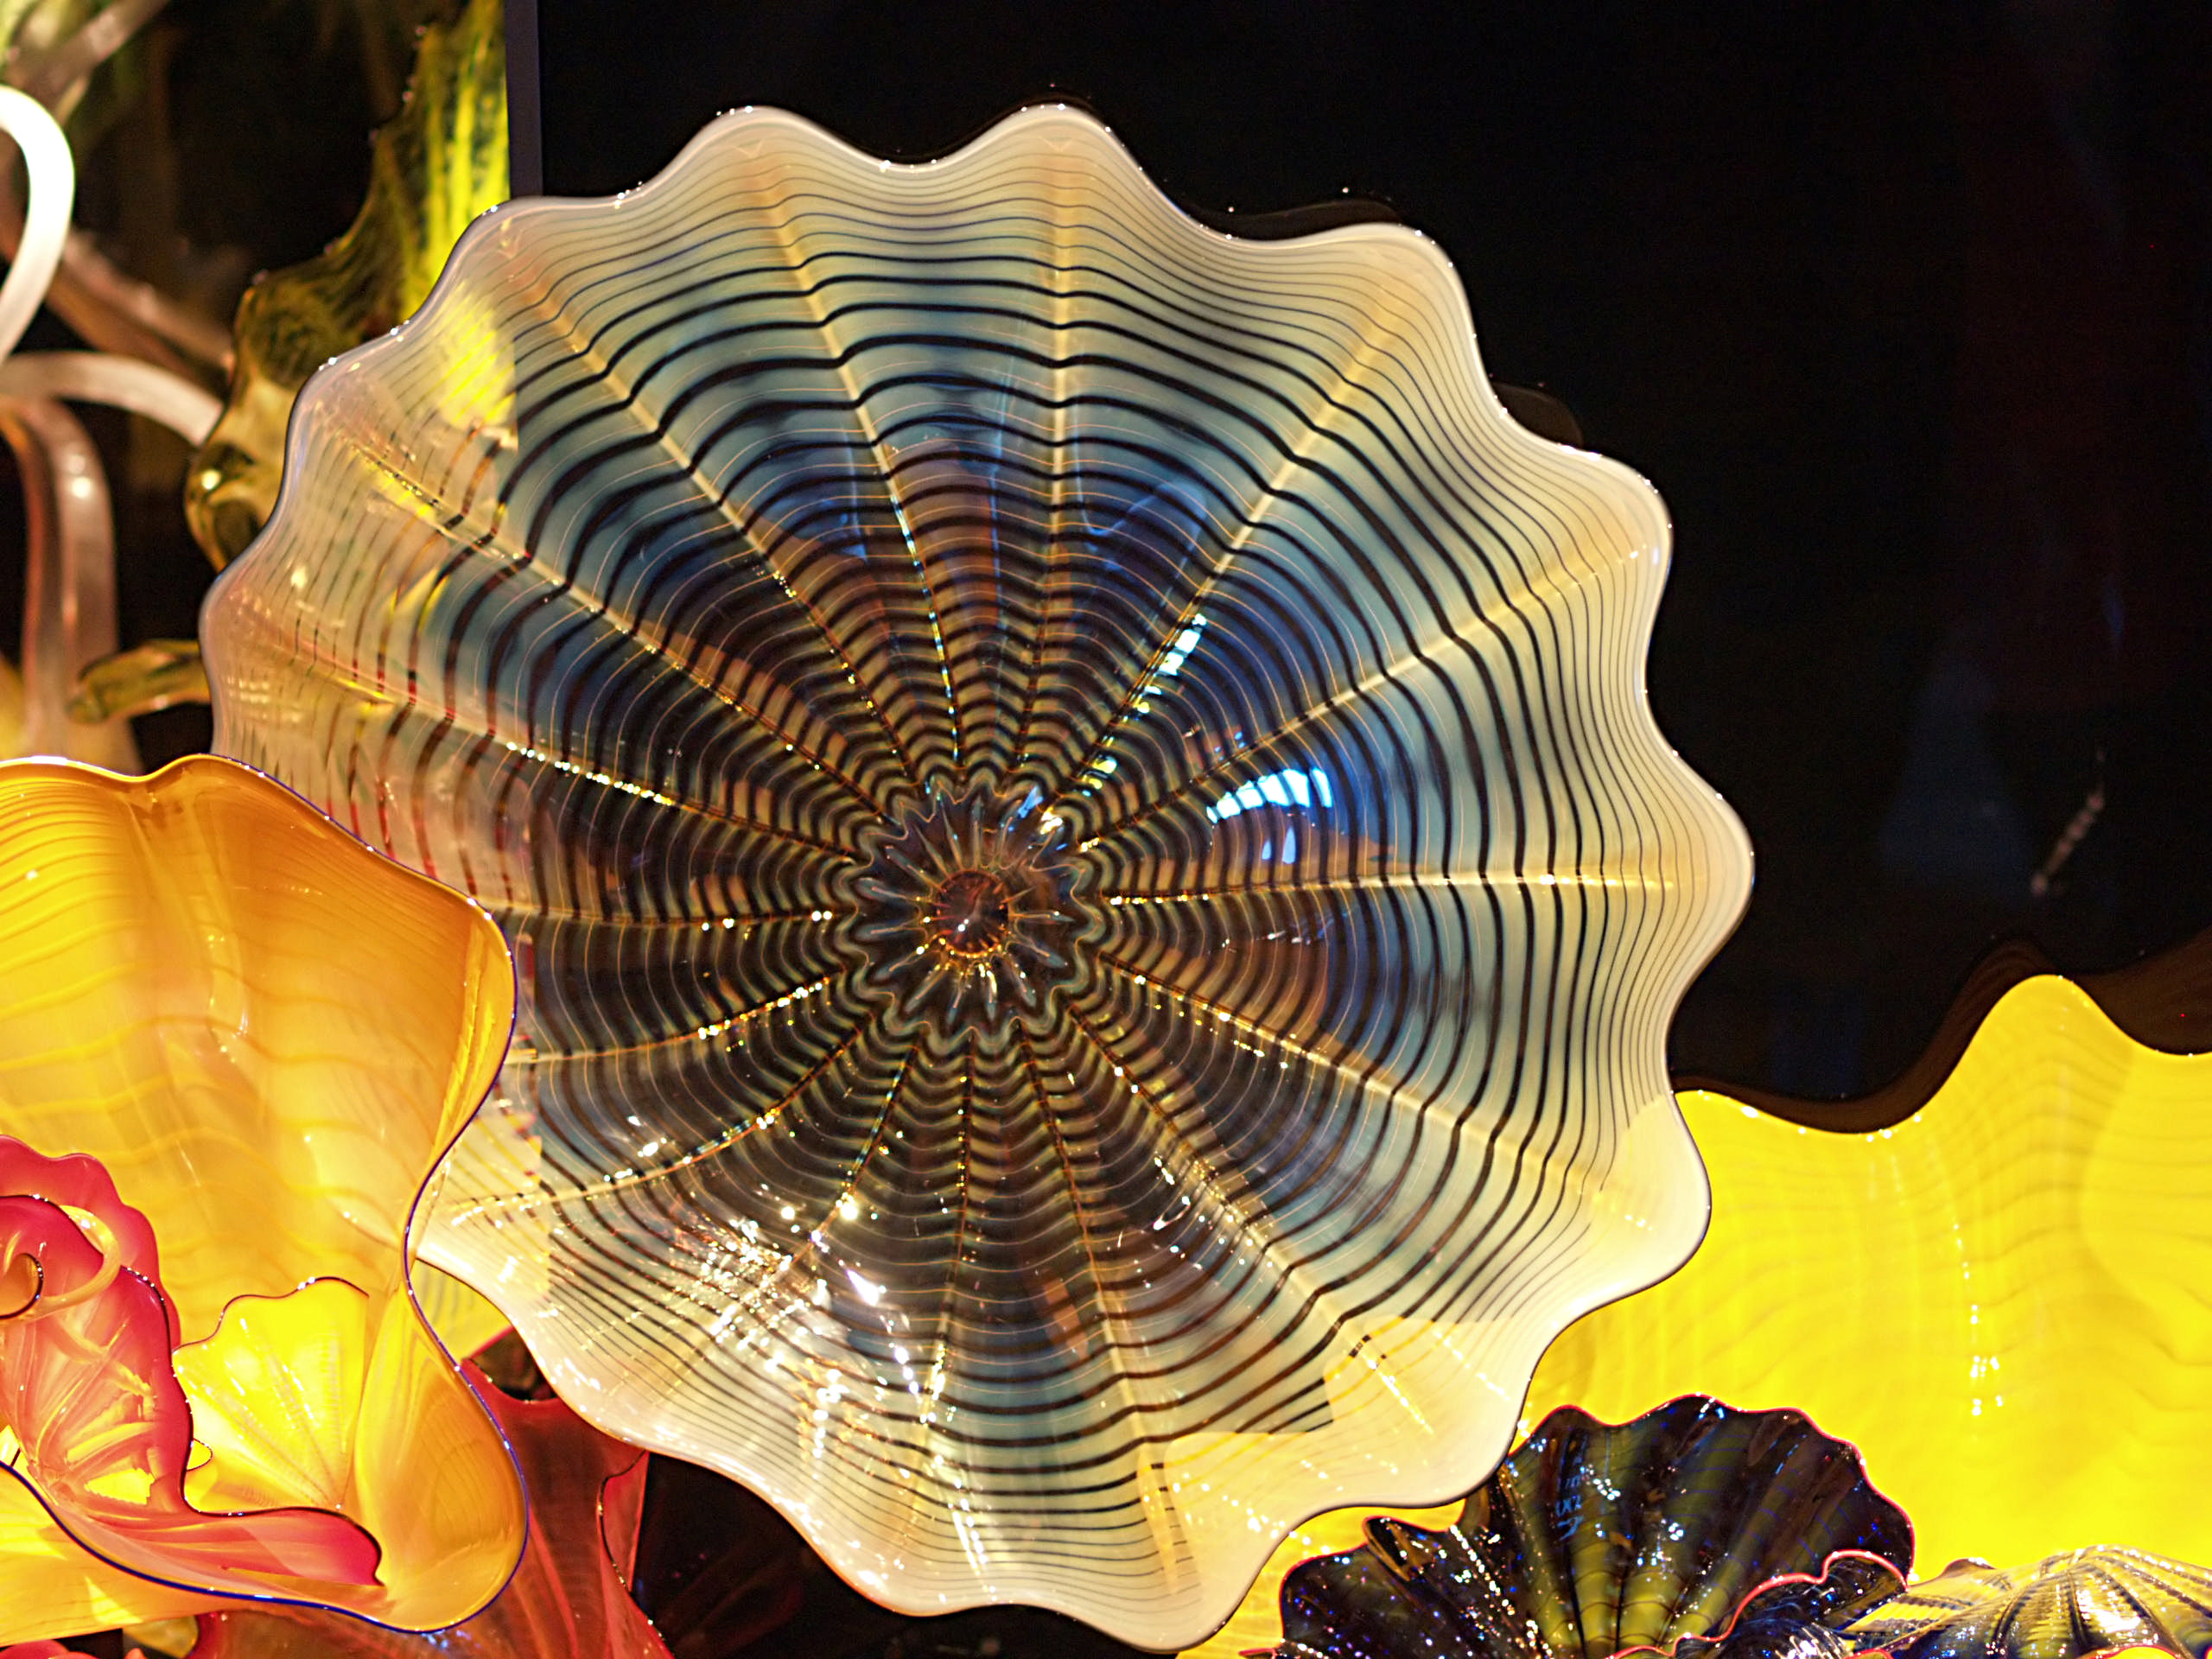 Glass sculpture of jellies #2